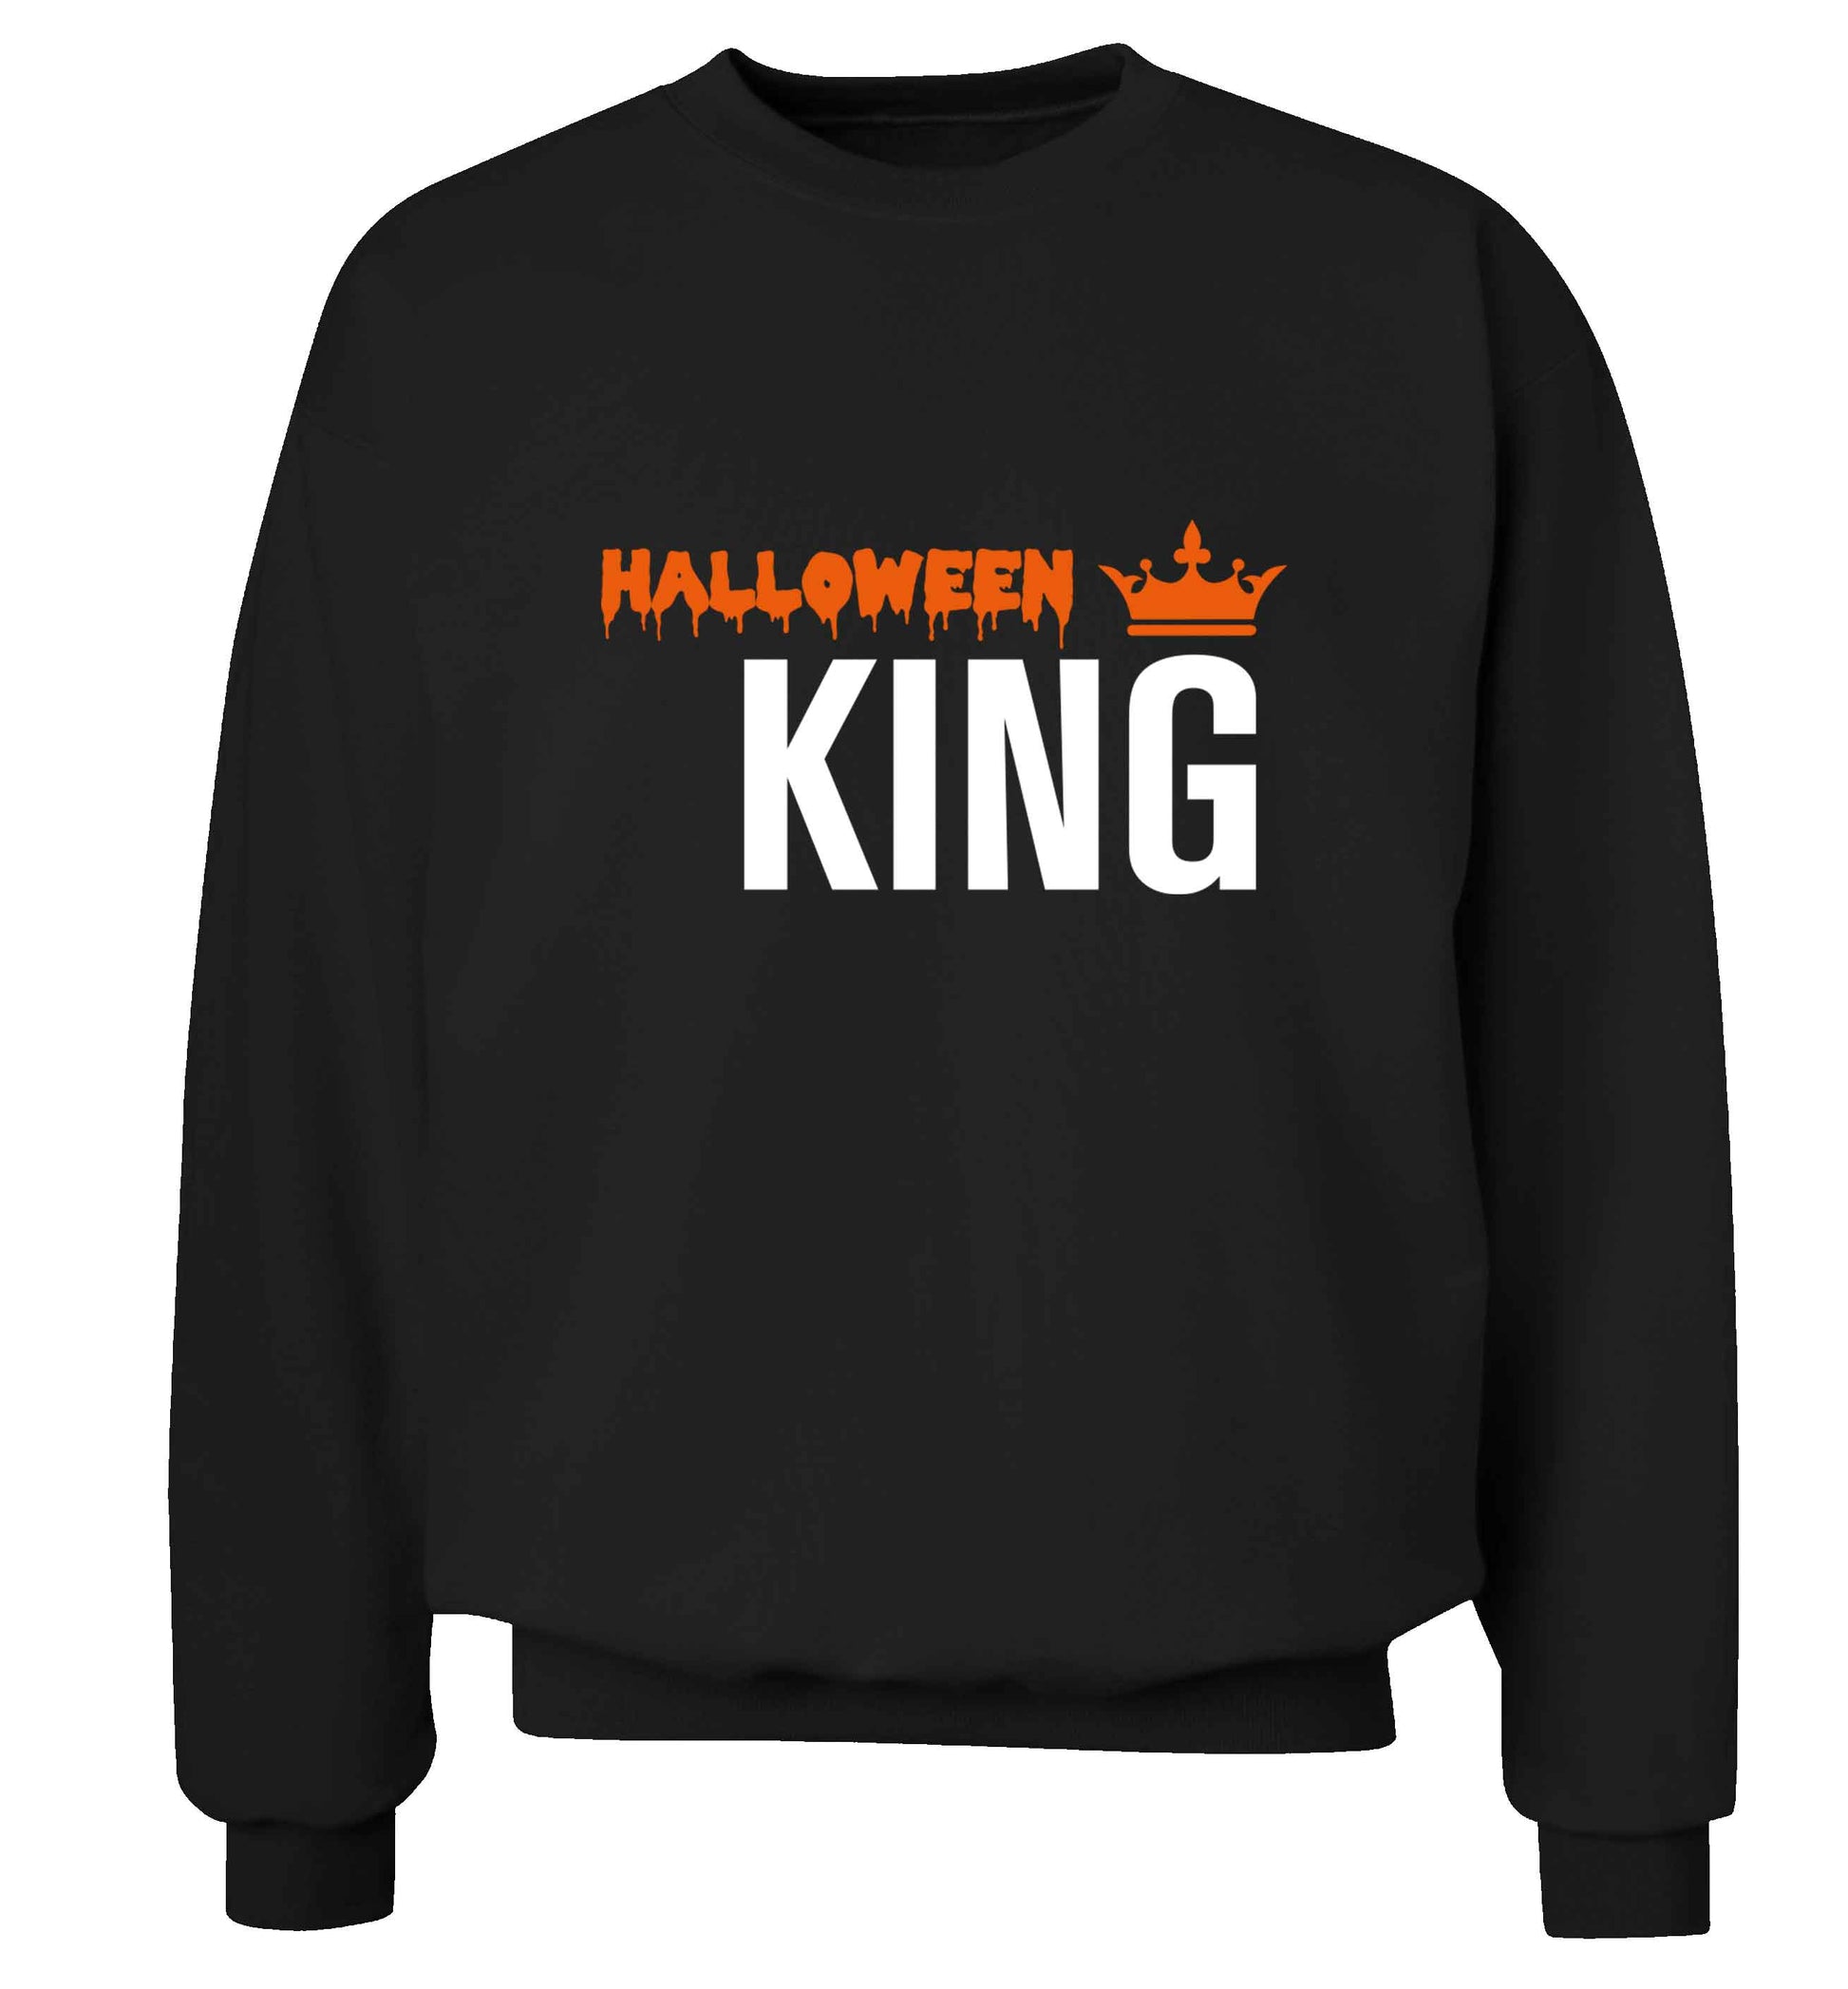 Halloween king adult's unisex black sweater 2XL